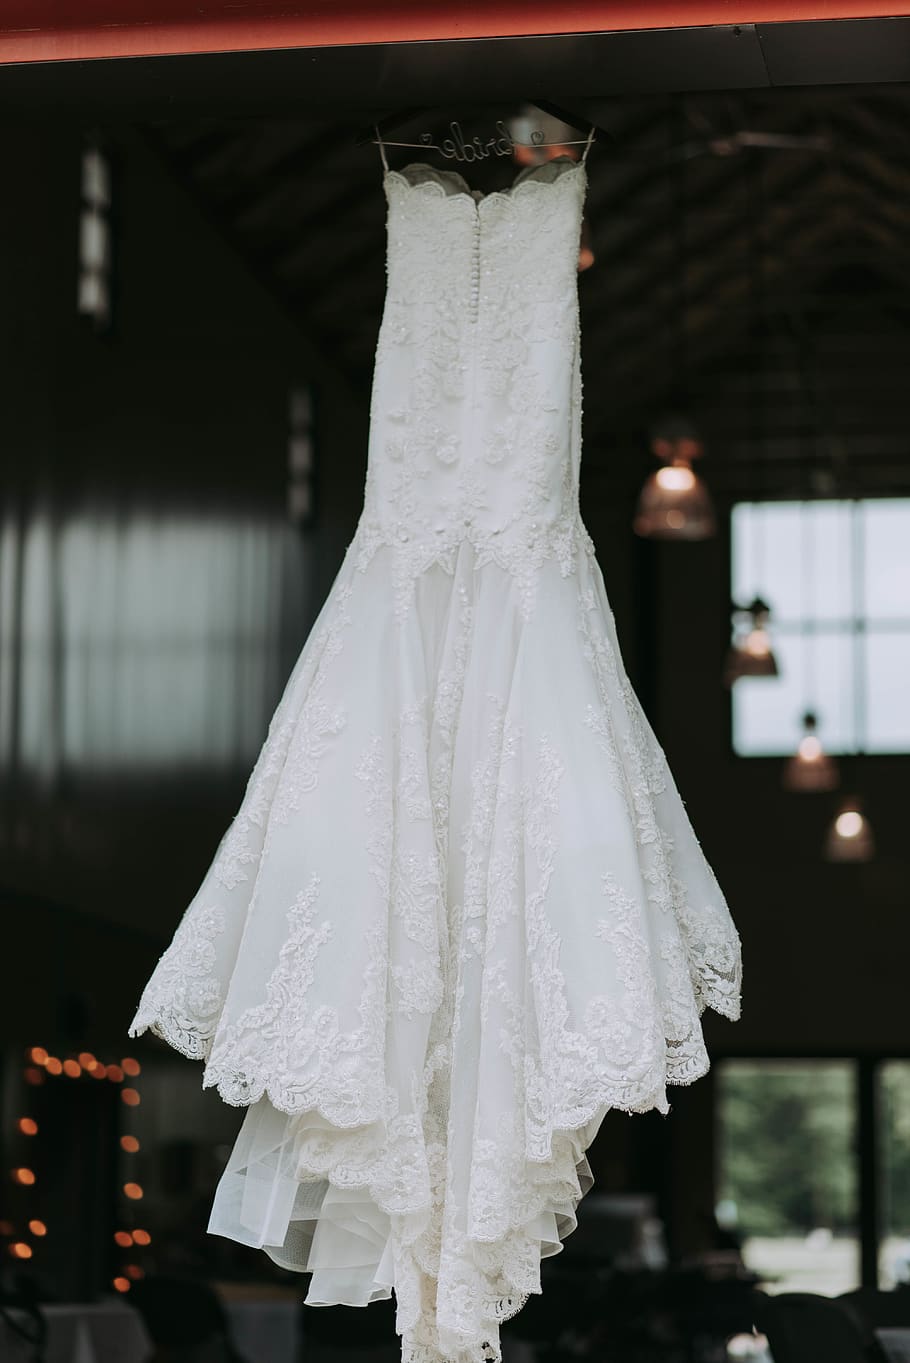 women's white strapless wedding dress hanged on clothes hanger, HD wallpaper